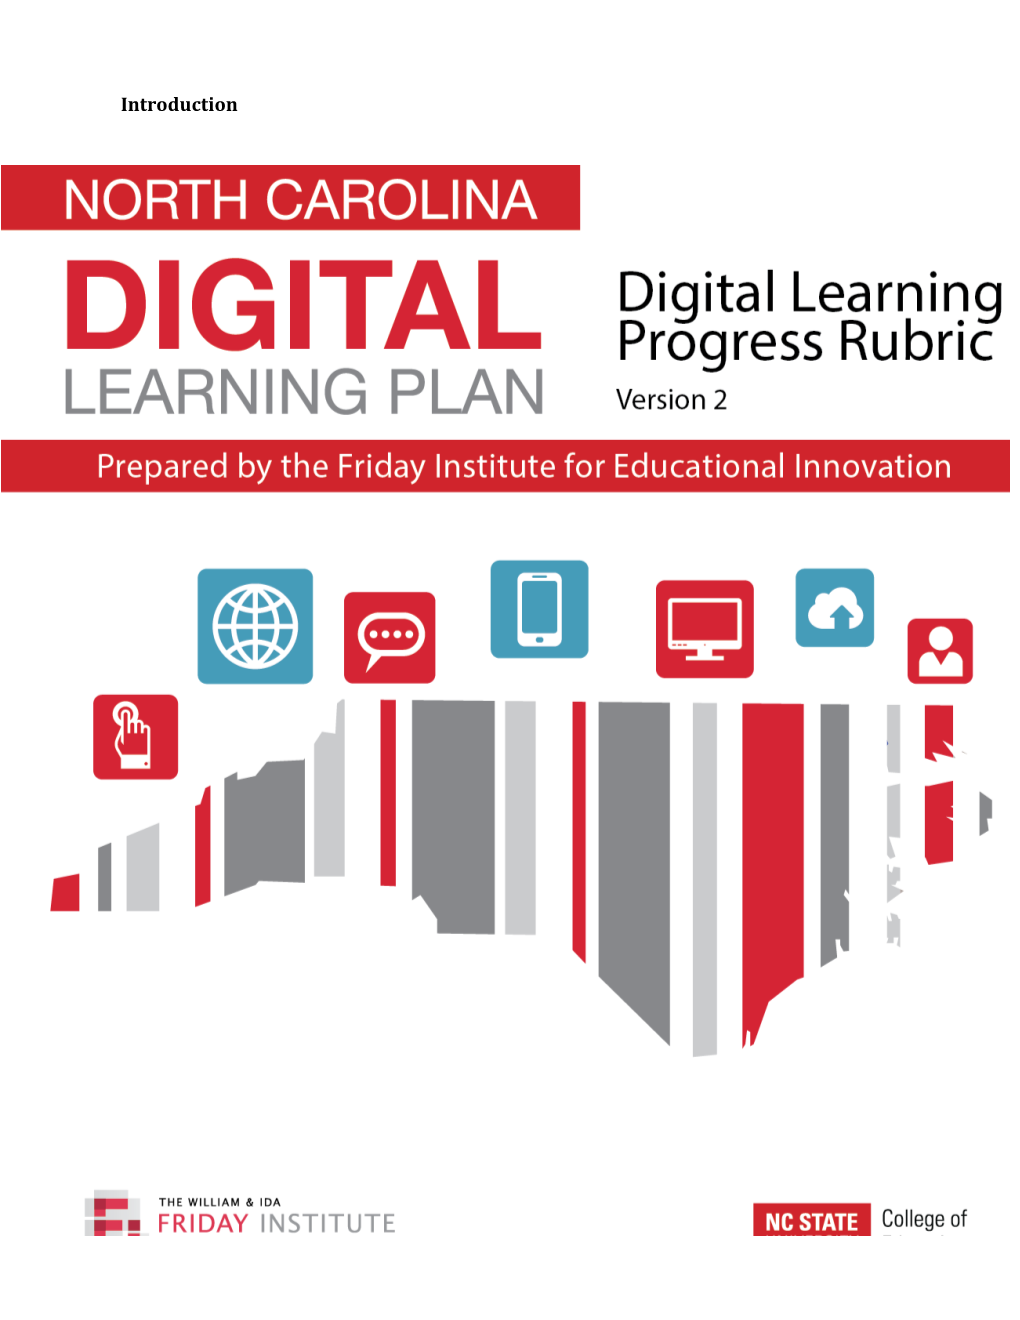 The North Carolina Digital Learning Progress Rubric Is a Strategic Planning Tool, Or Roadmap